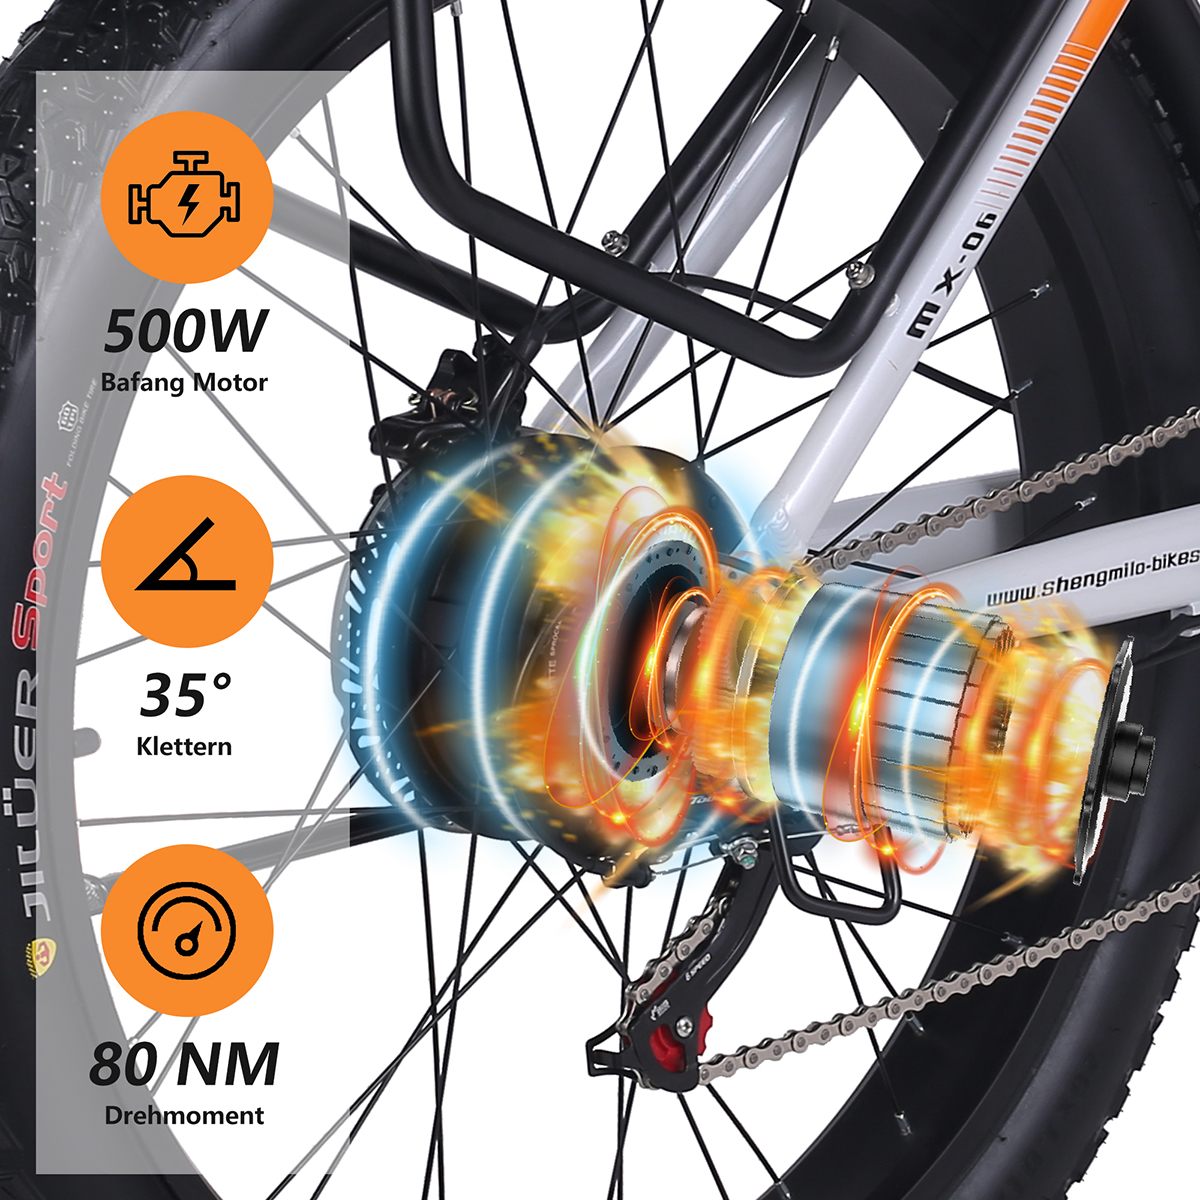 MX06 Unisex-Rad, 26 Zoll, 840Wh, W Spitze SHENGMILO Strand-Elektrofahrrad, Hochleistungs-BAFANG-Motor Weiss) Snowbike, Urbanbike 1000 (Laufradgröße: